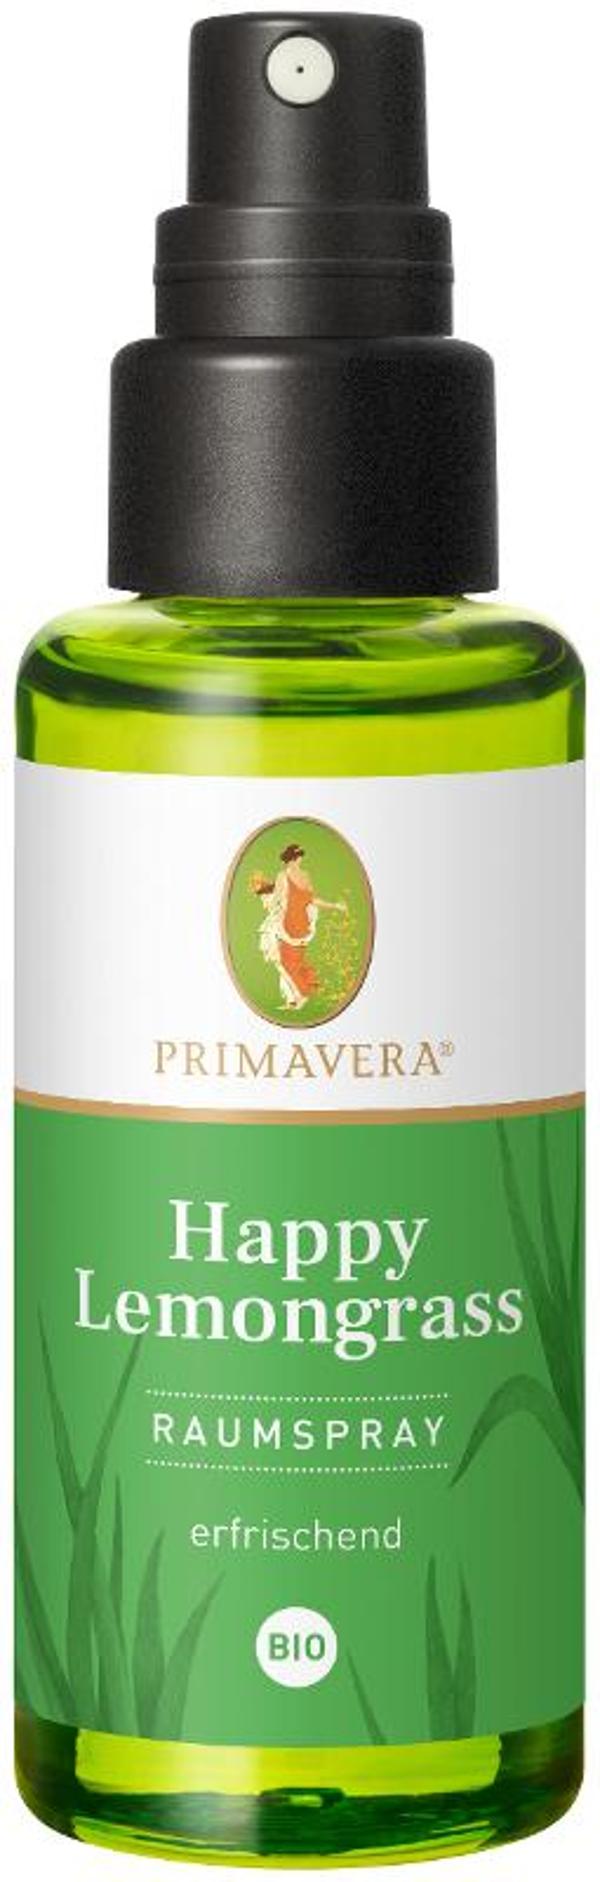 Produktfoto zu Happy Lemongrass Raumspray, 50 ml